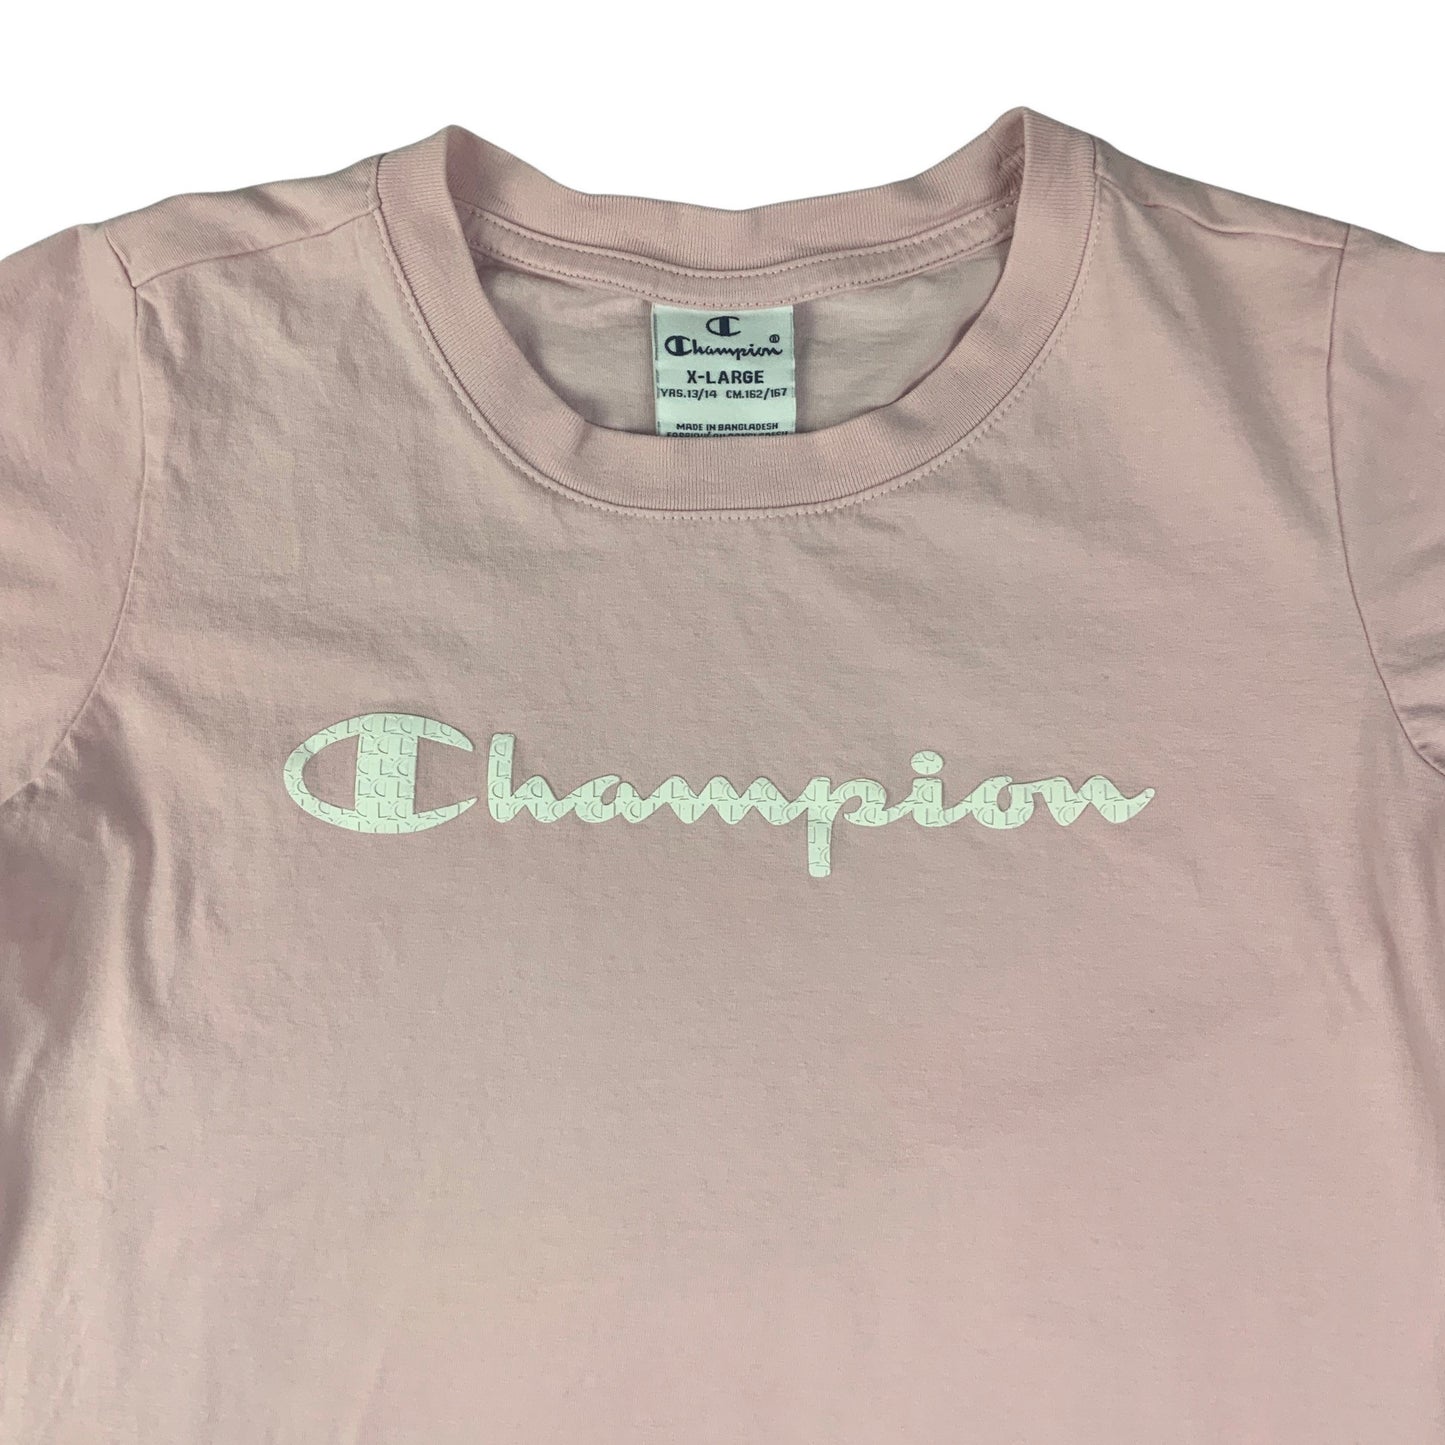 Vintage 90s Baby Pink Champion Tee T-Shirt 6 8